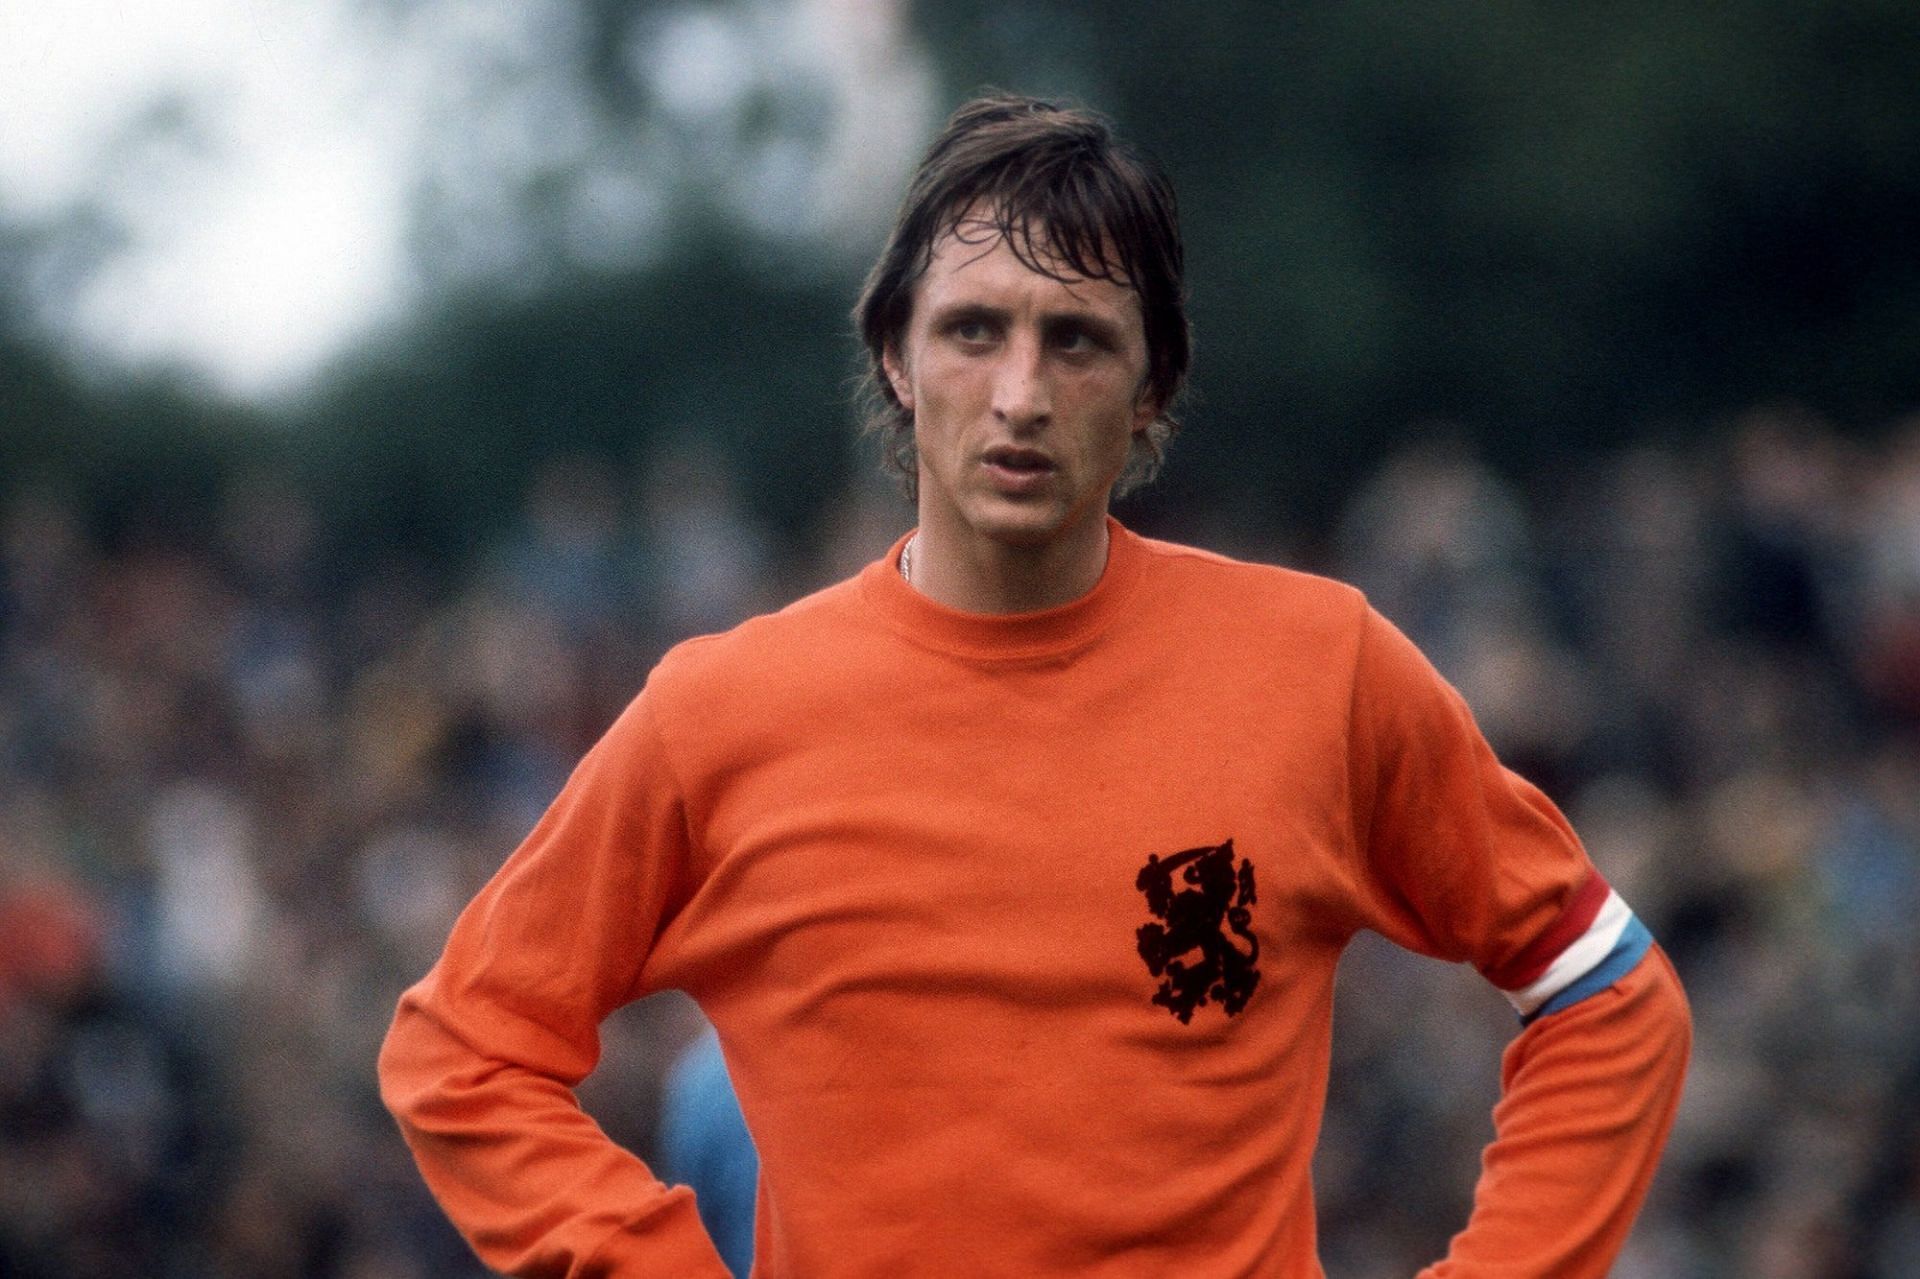 Johan Cruyff (pic cred: The New Yorker)